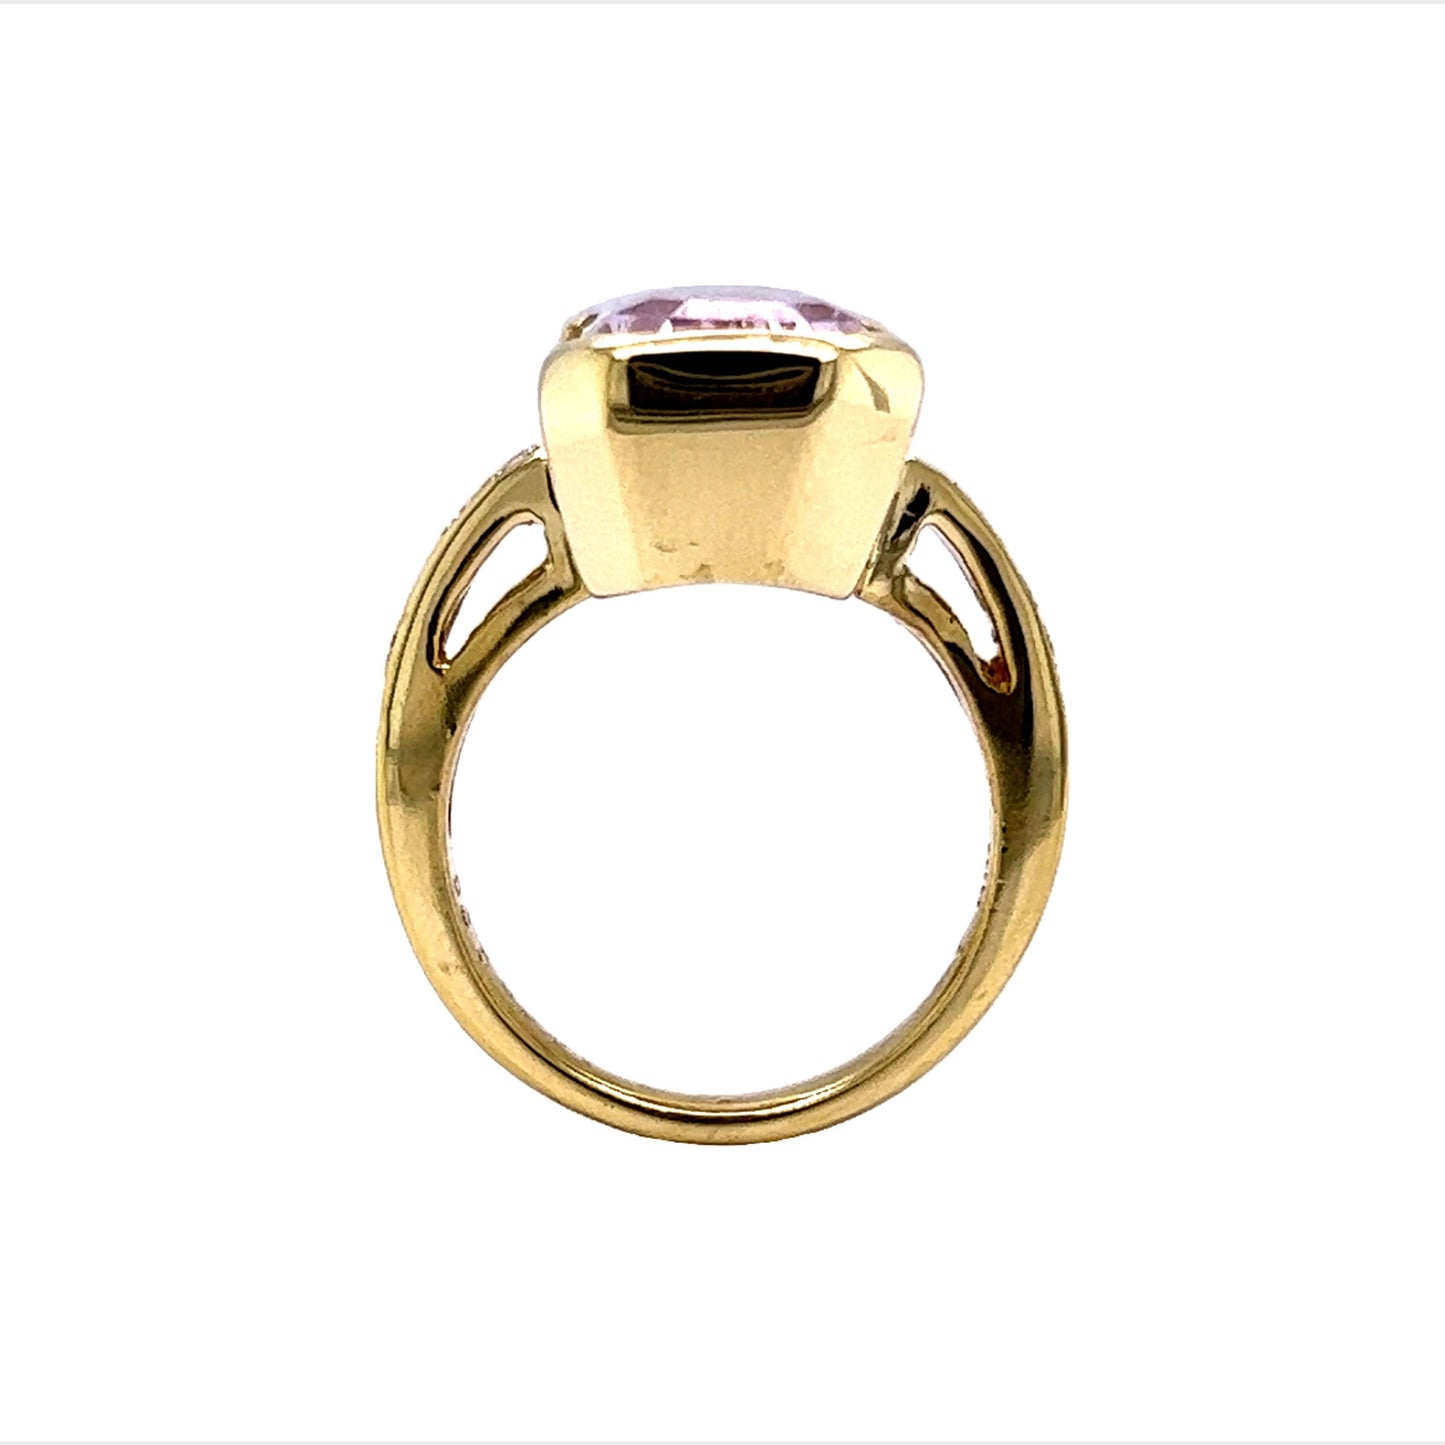 Elongated Kunzite & Diamond Cocktail Ring in 18k Yellow Gold